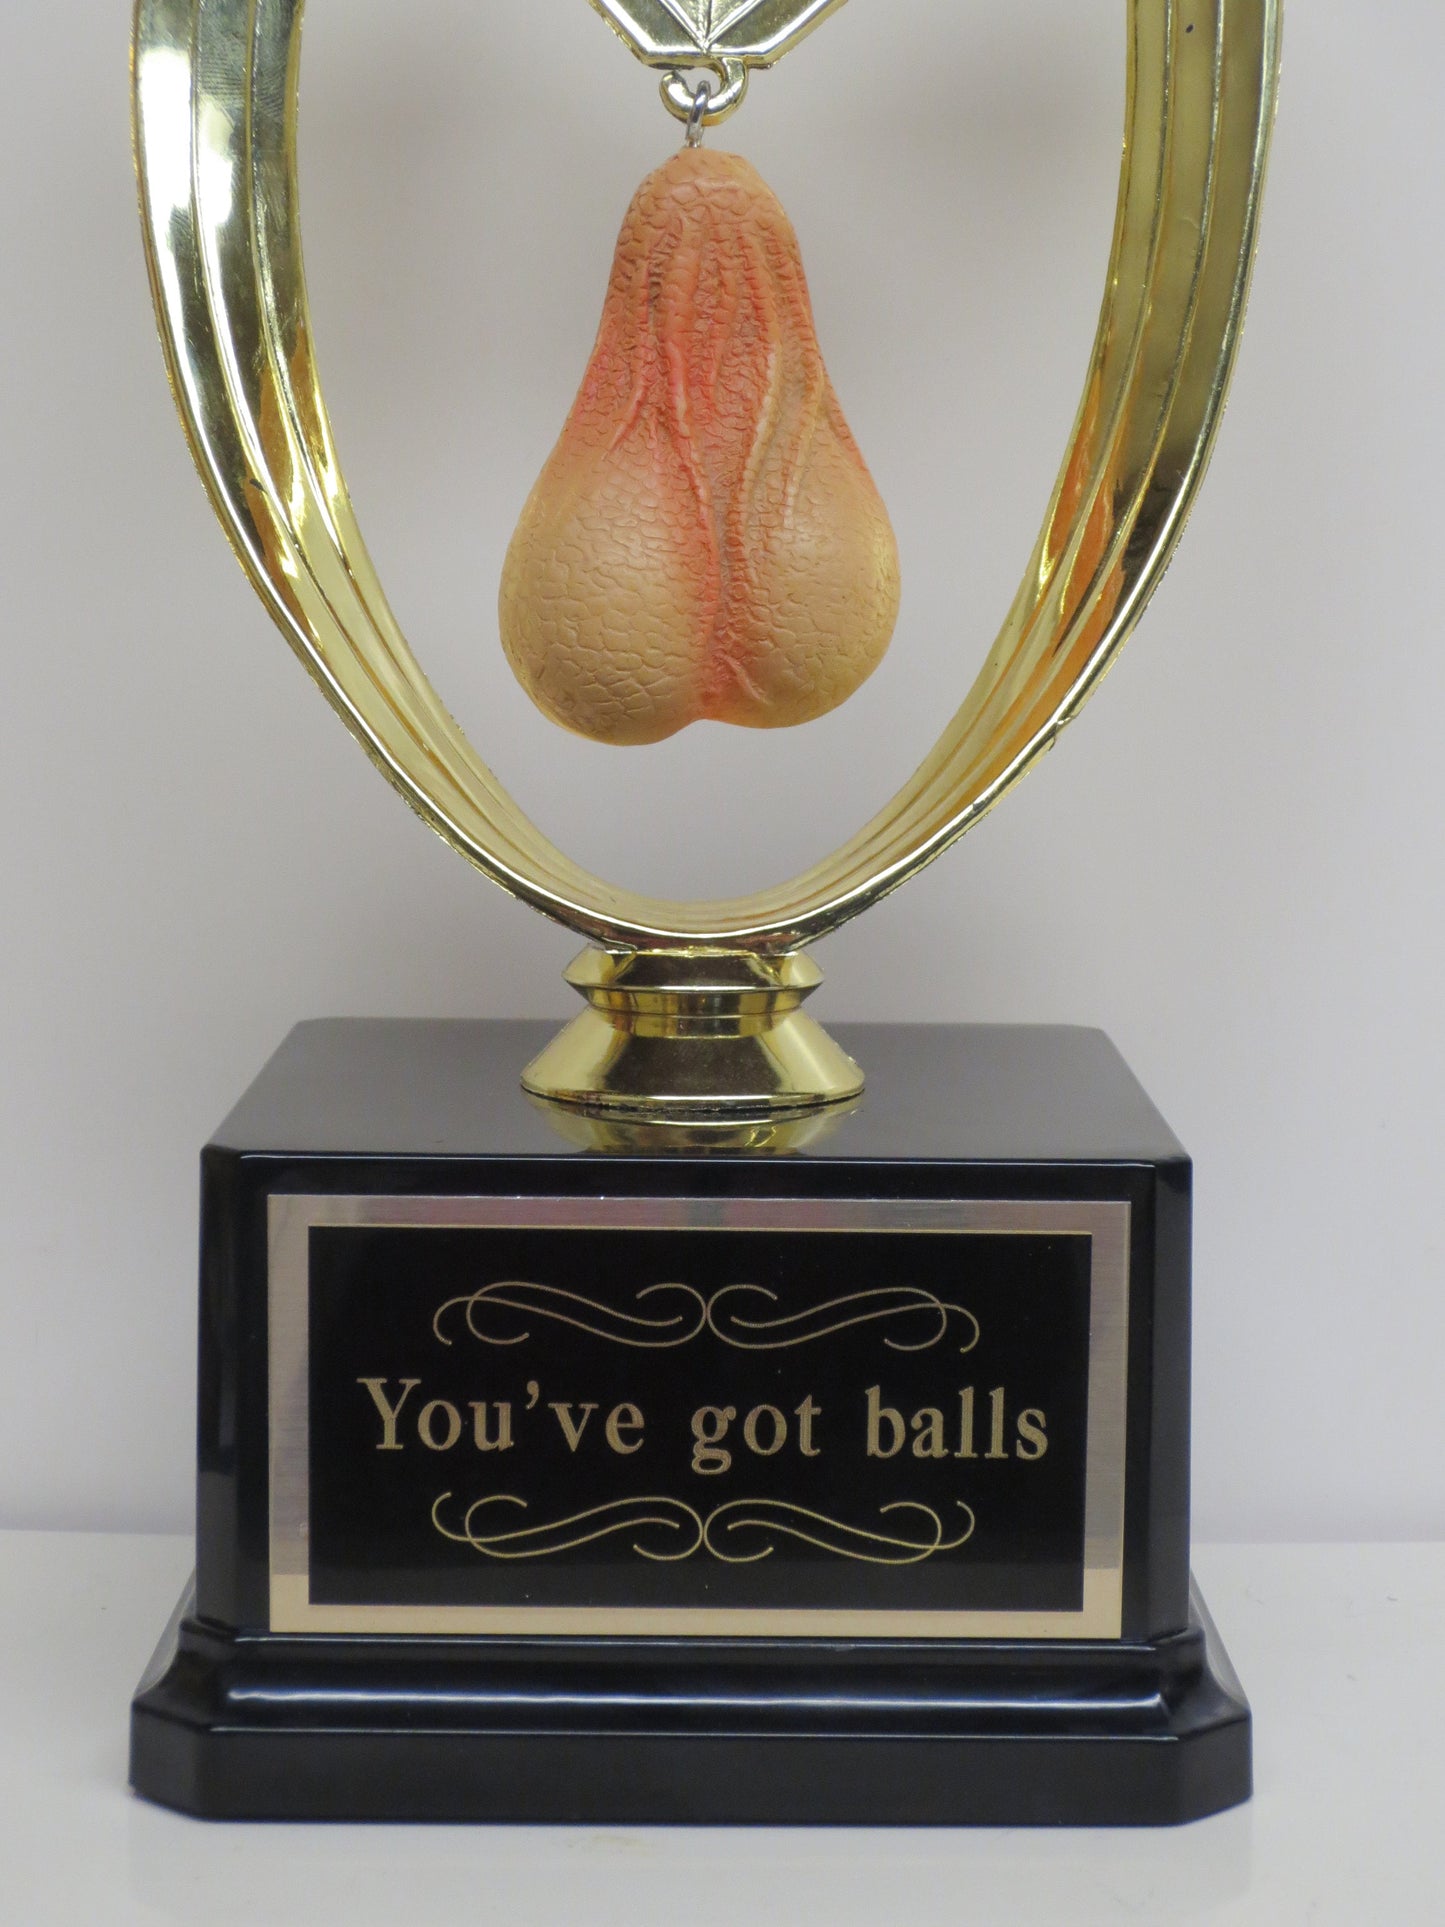 Testicle Trophy FFL Trophy Fantasy Football Sacko Award Awww Nuts! Last Place Loser Sacko You've Got Balls Funny Trophy Adult Humor Gag Gift